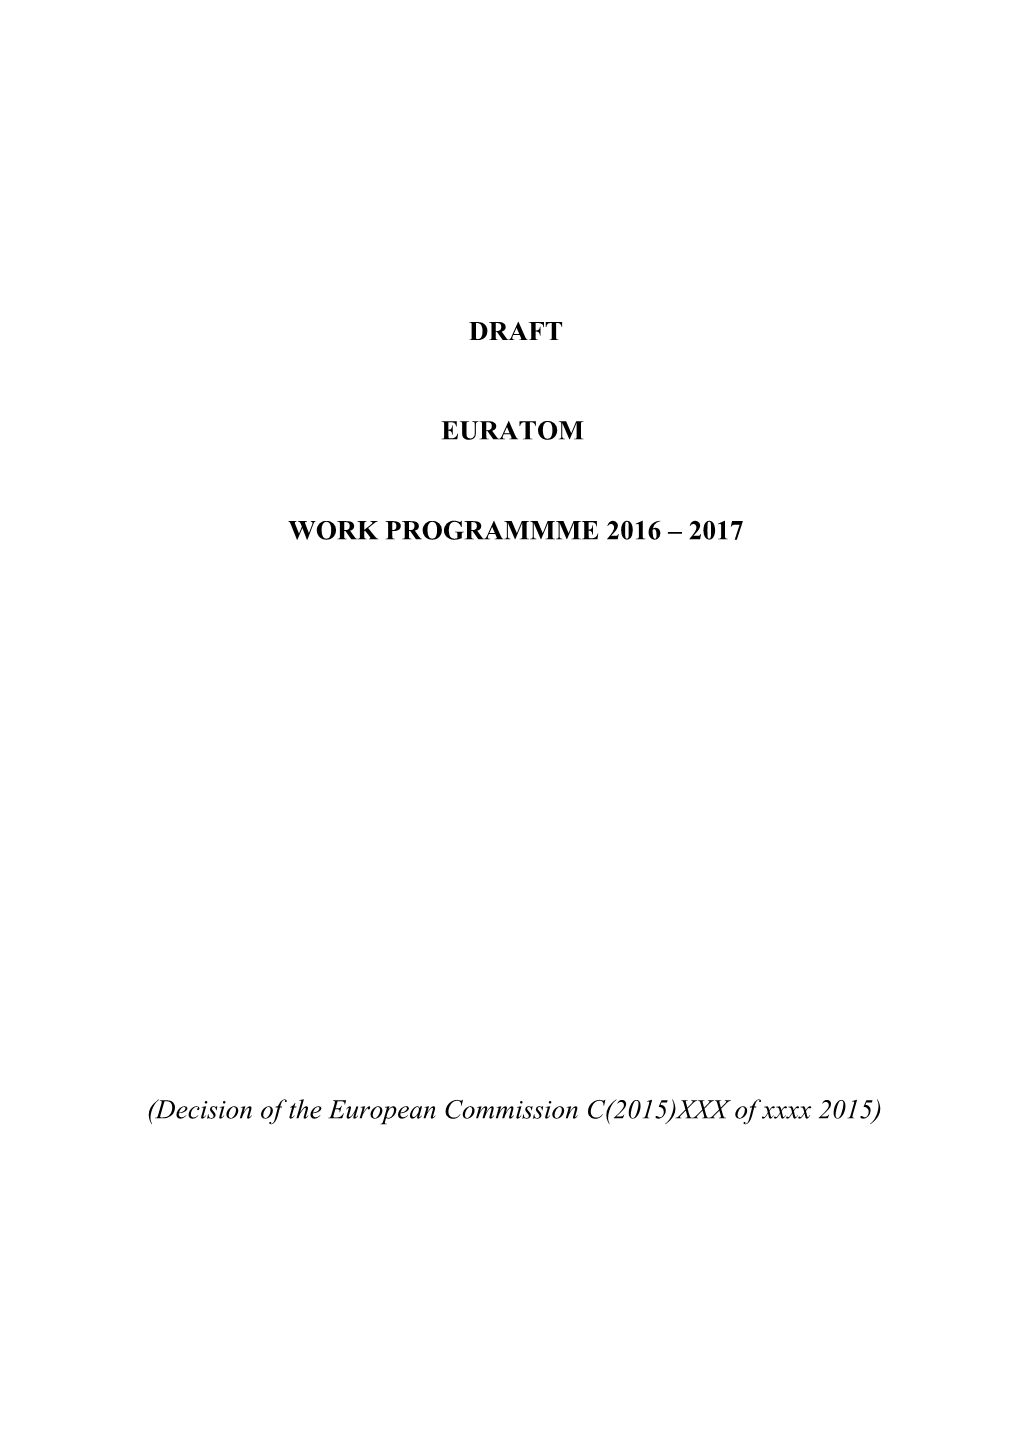 Euratom Work Programme 2016-2017